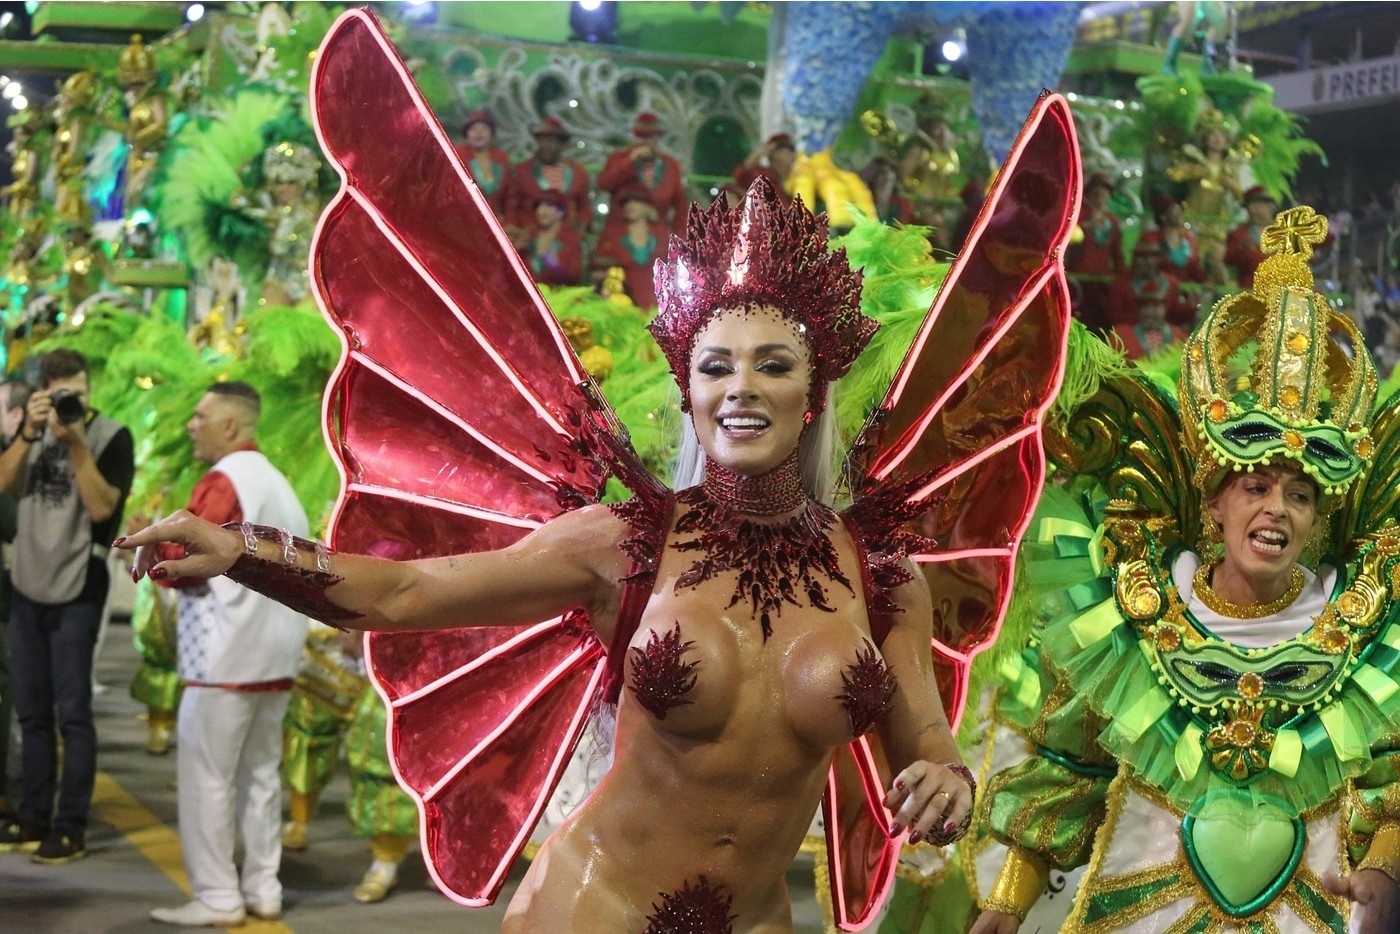 порно фестиваль бразилия фото 46